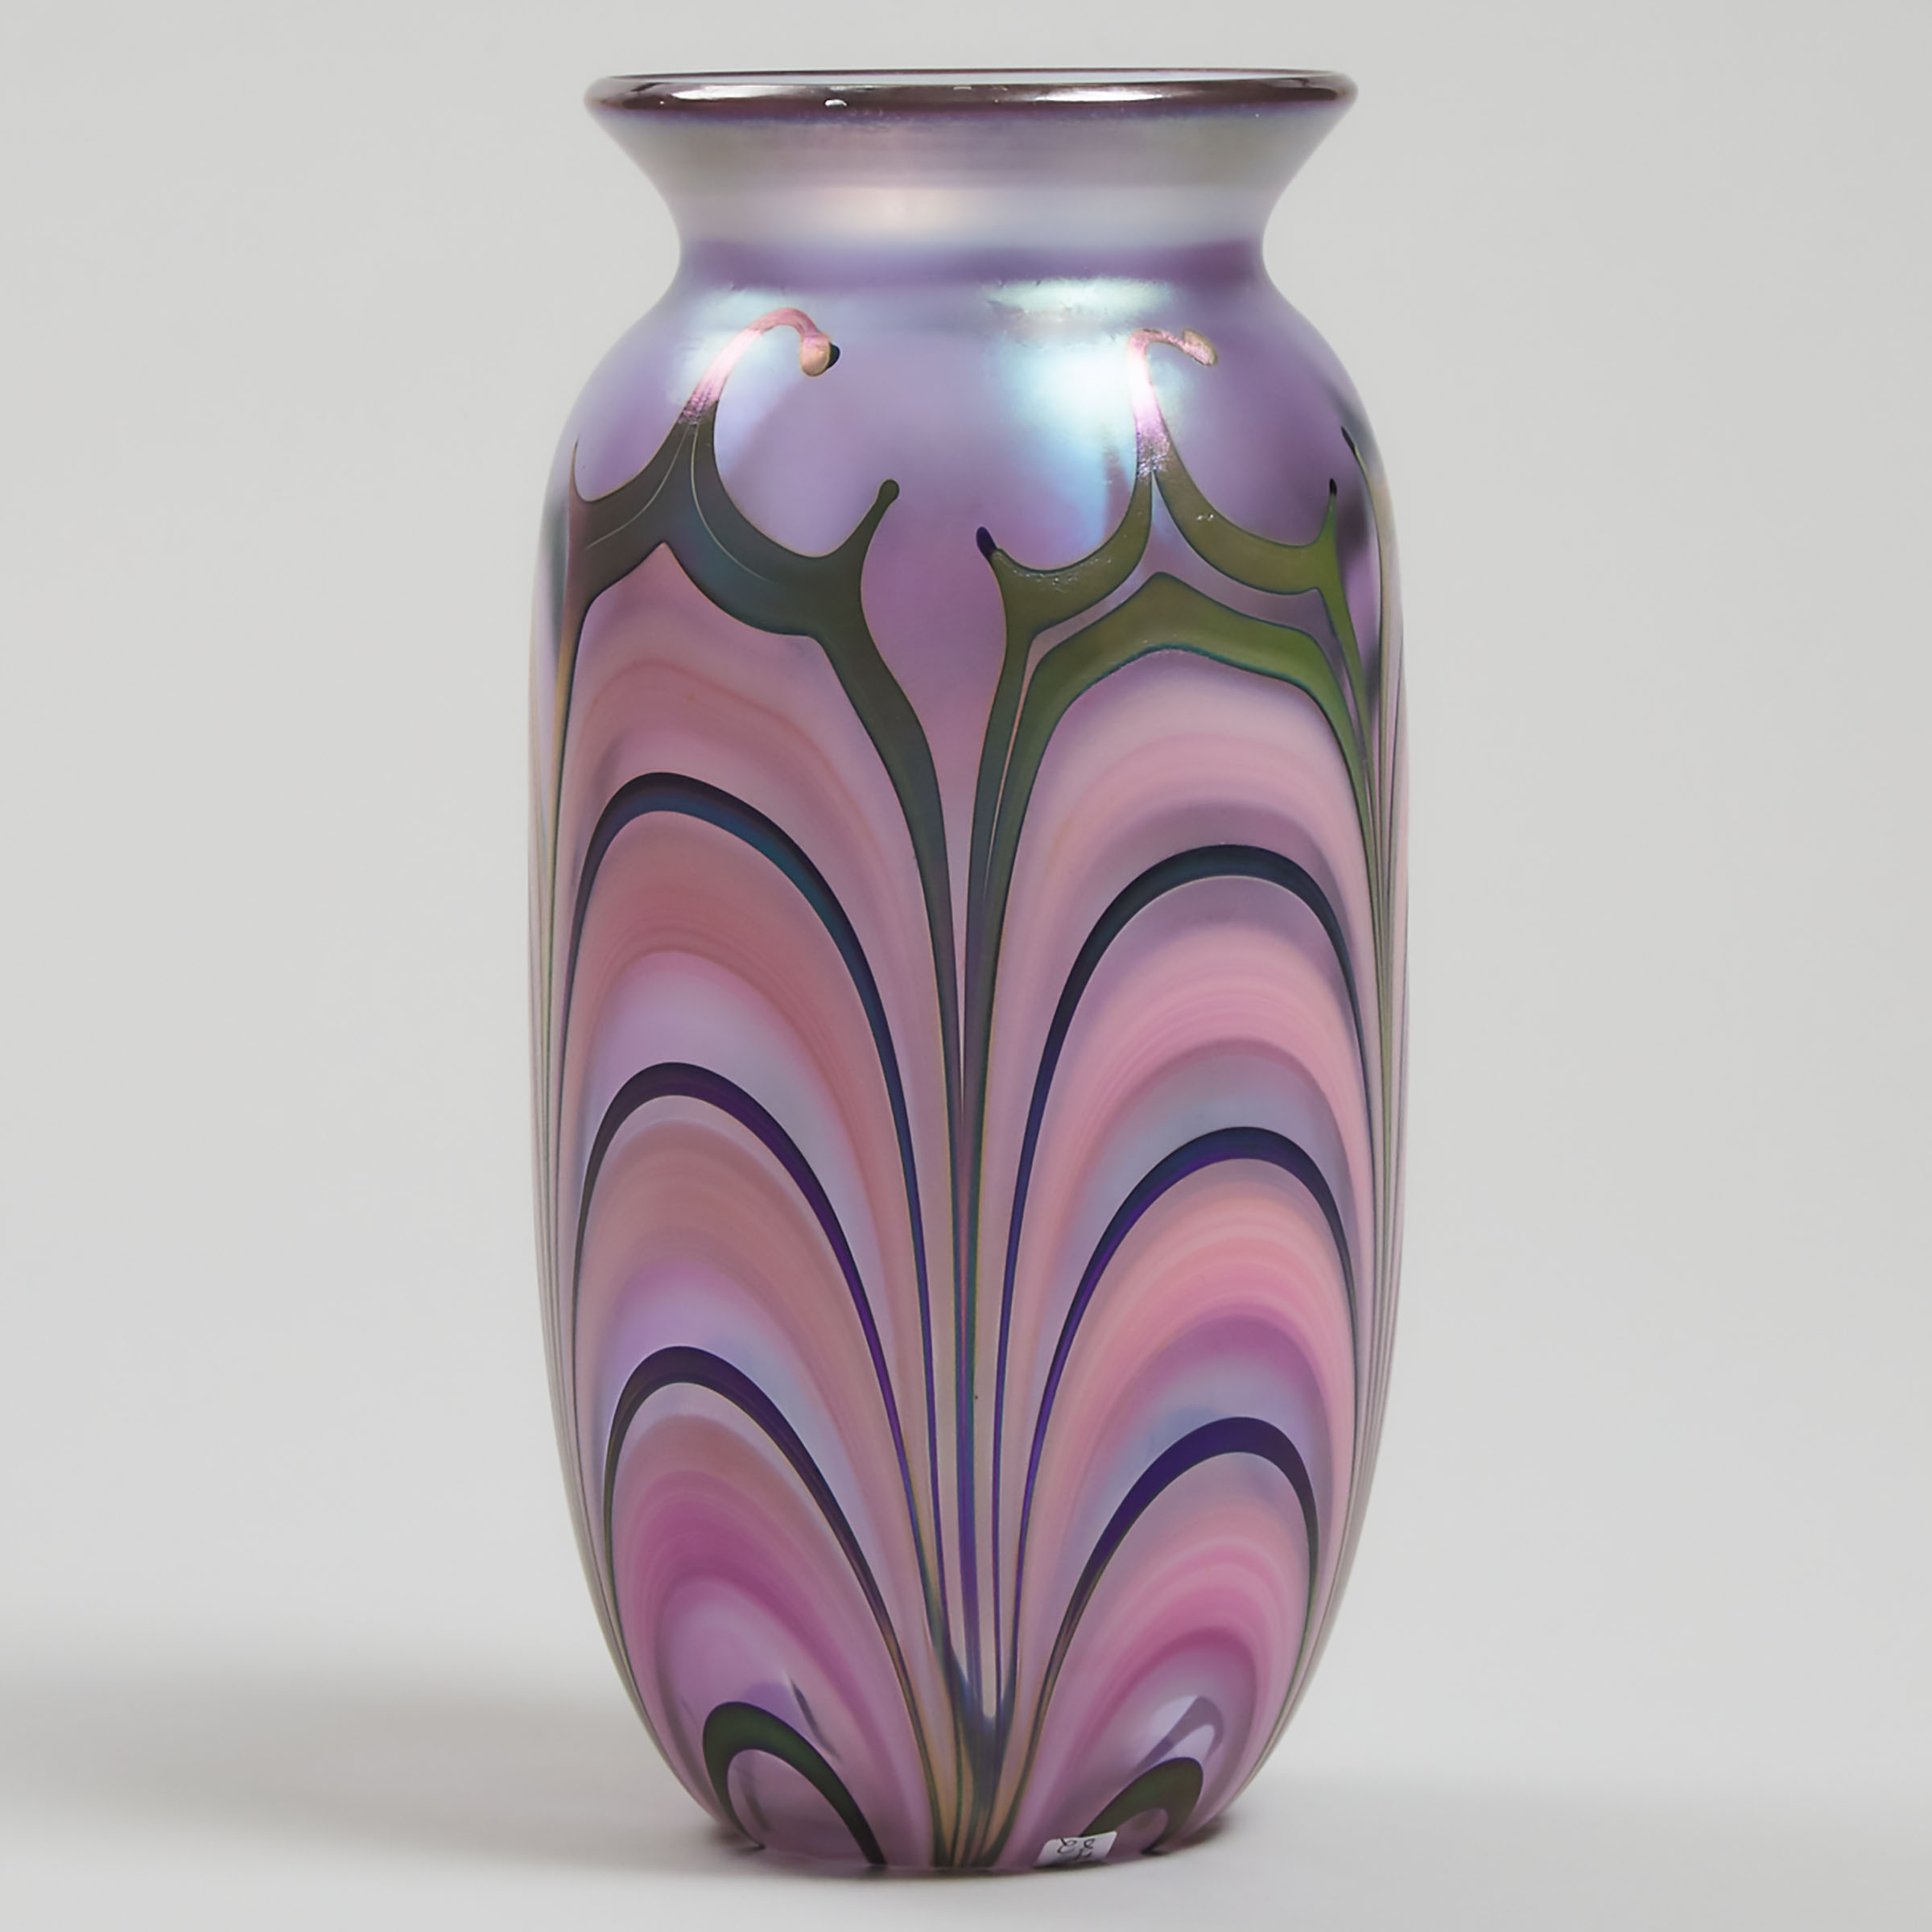 John Lotton (American, b.1964), Iridescent Glass Vase, 1990